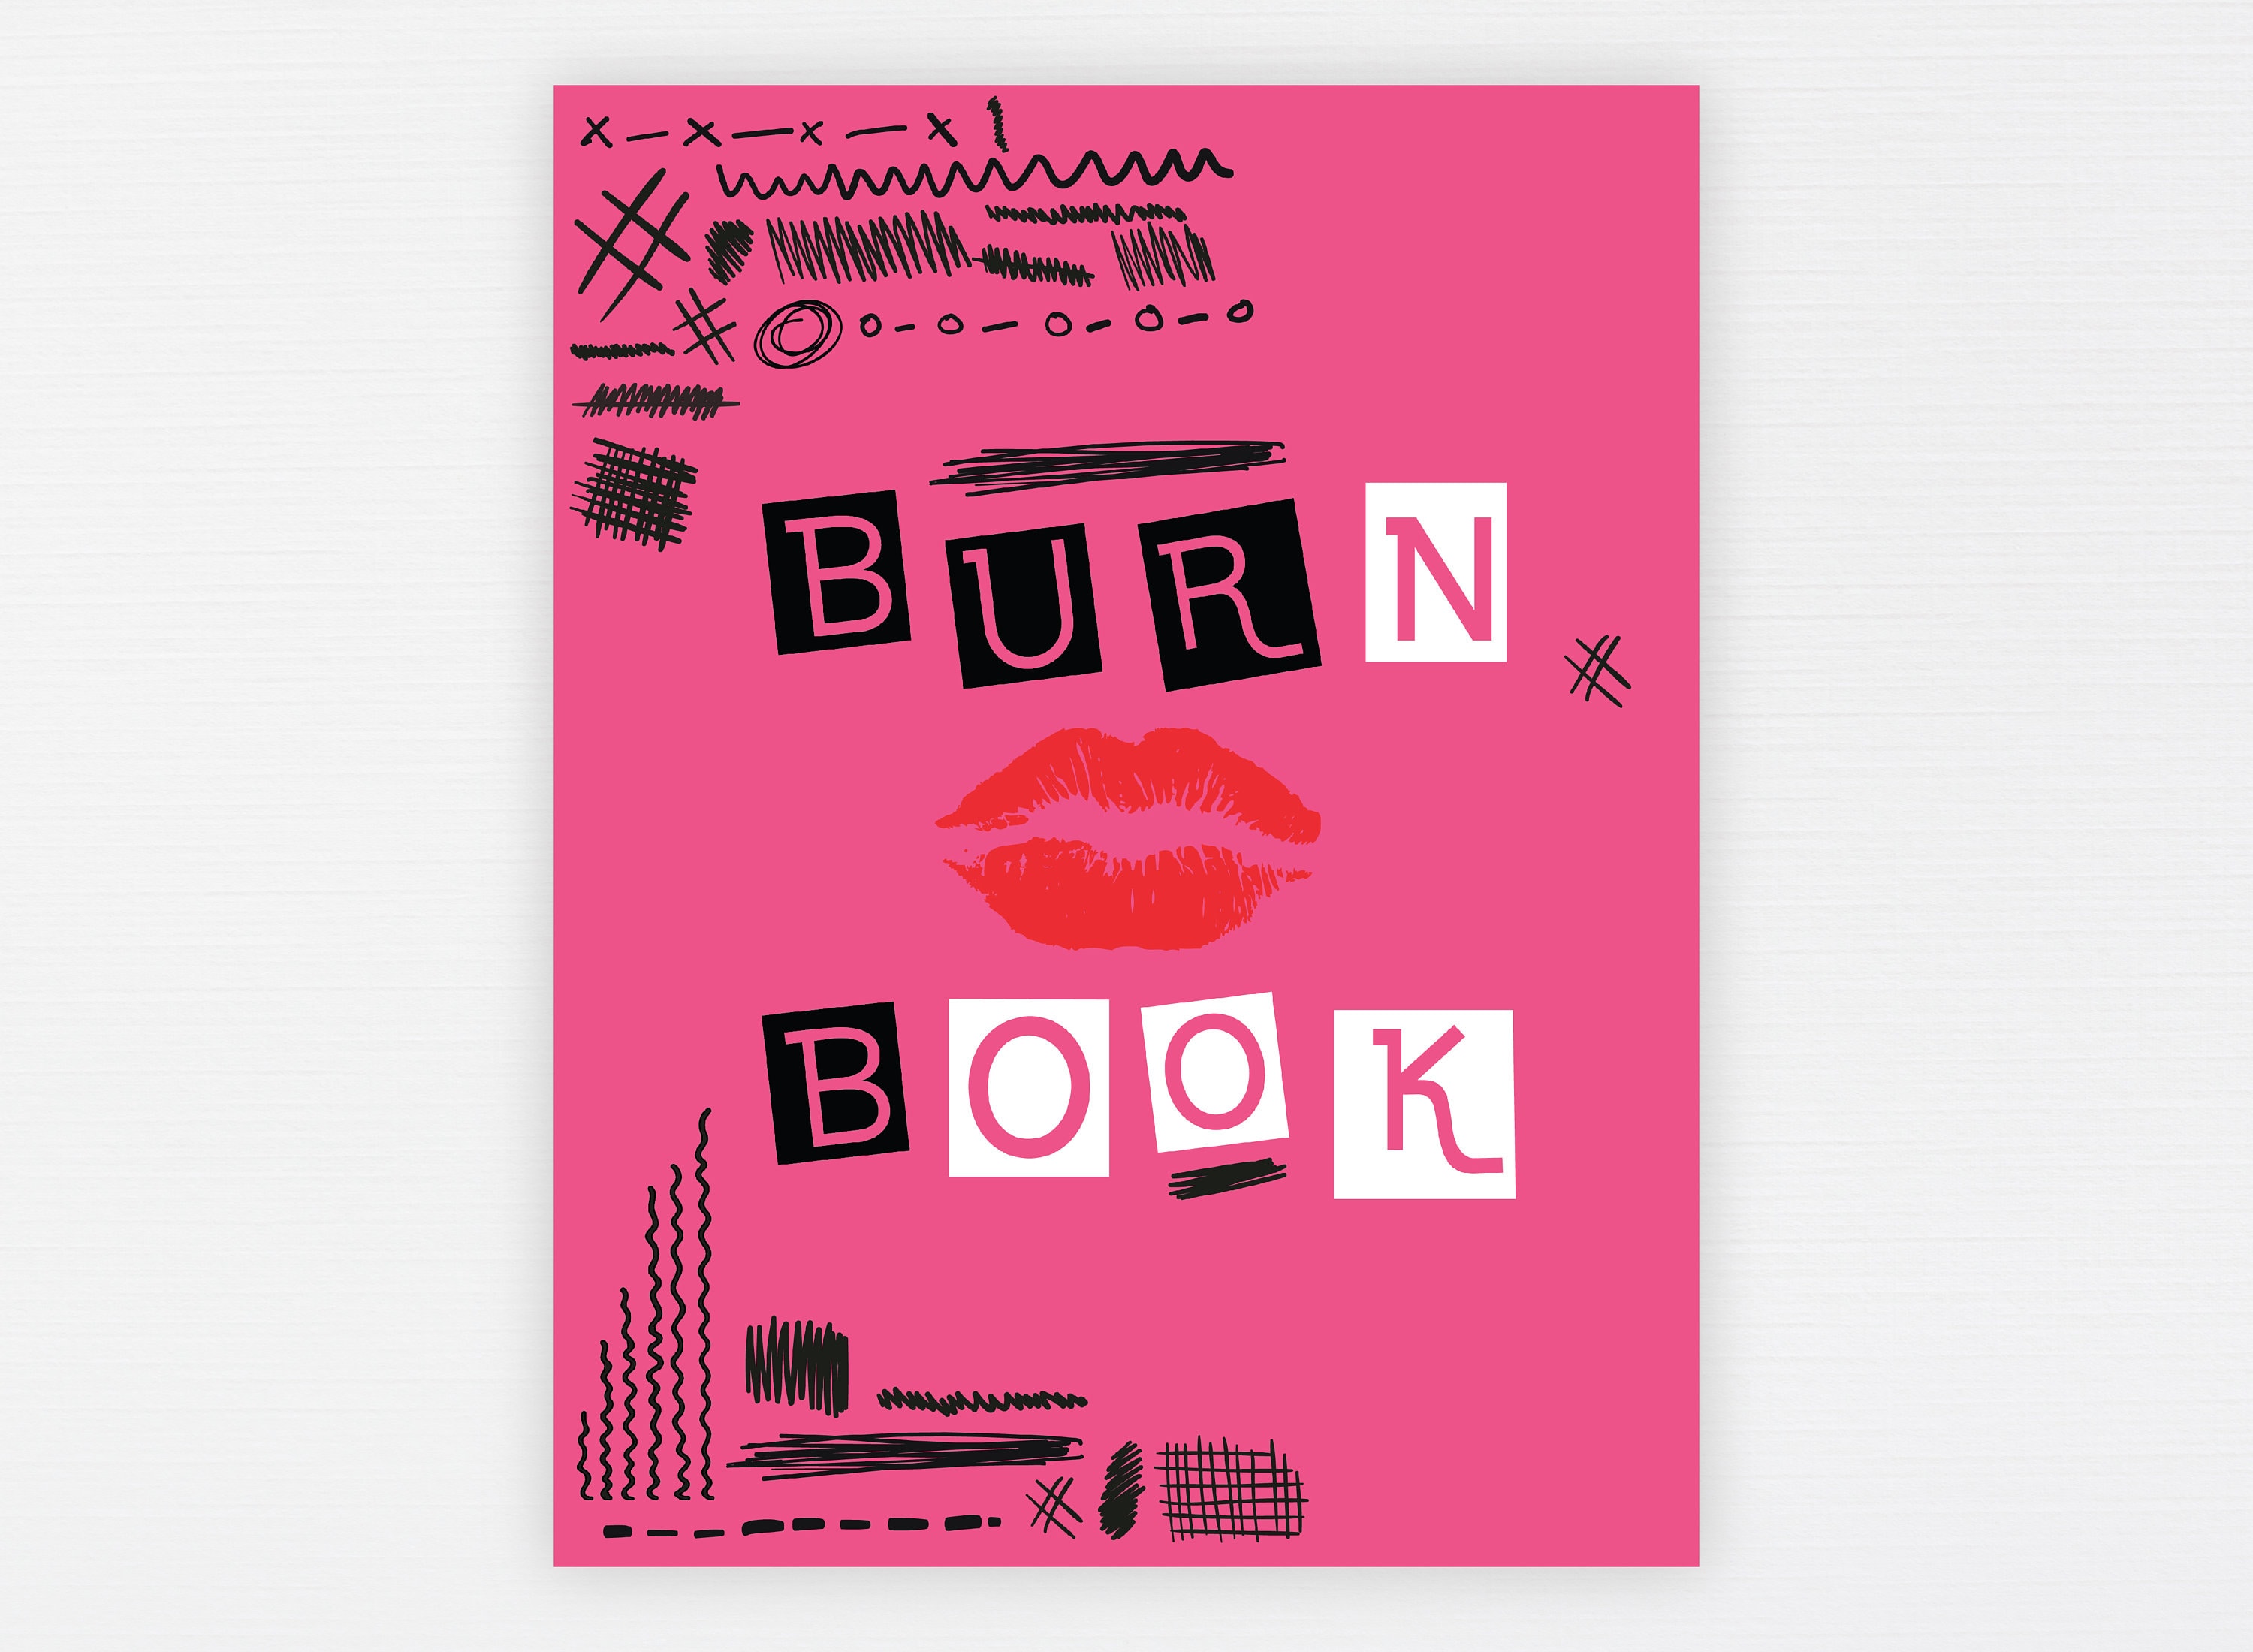 Burn Book SVG Burn Book Digital Mean Girls Quotes Burn Book -  Portugal